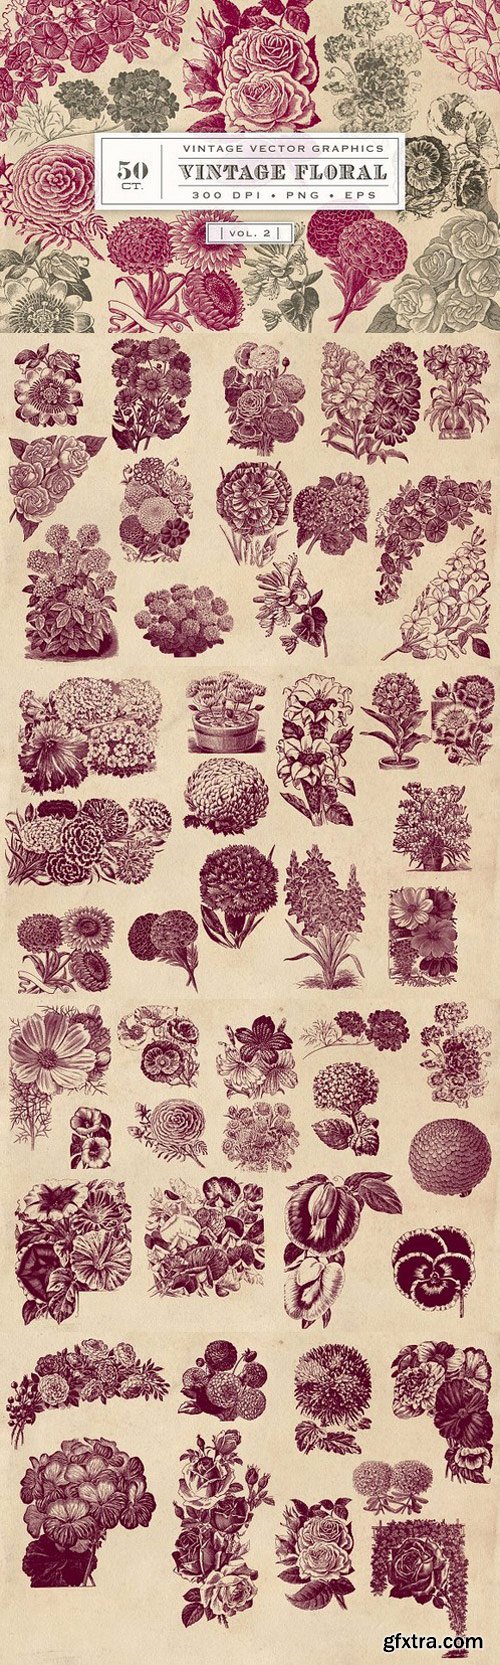 CM - Vintage Flower Vector Graphics 2 1587133